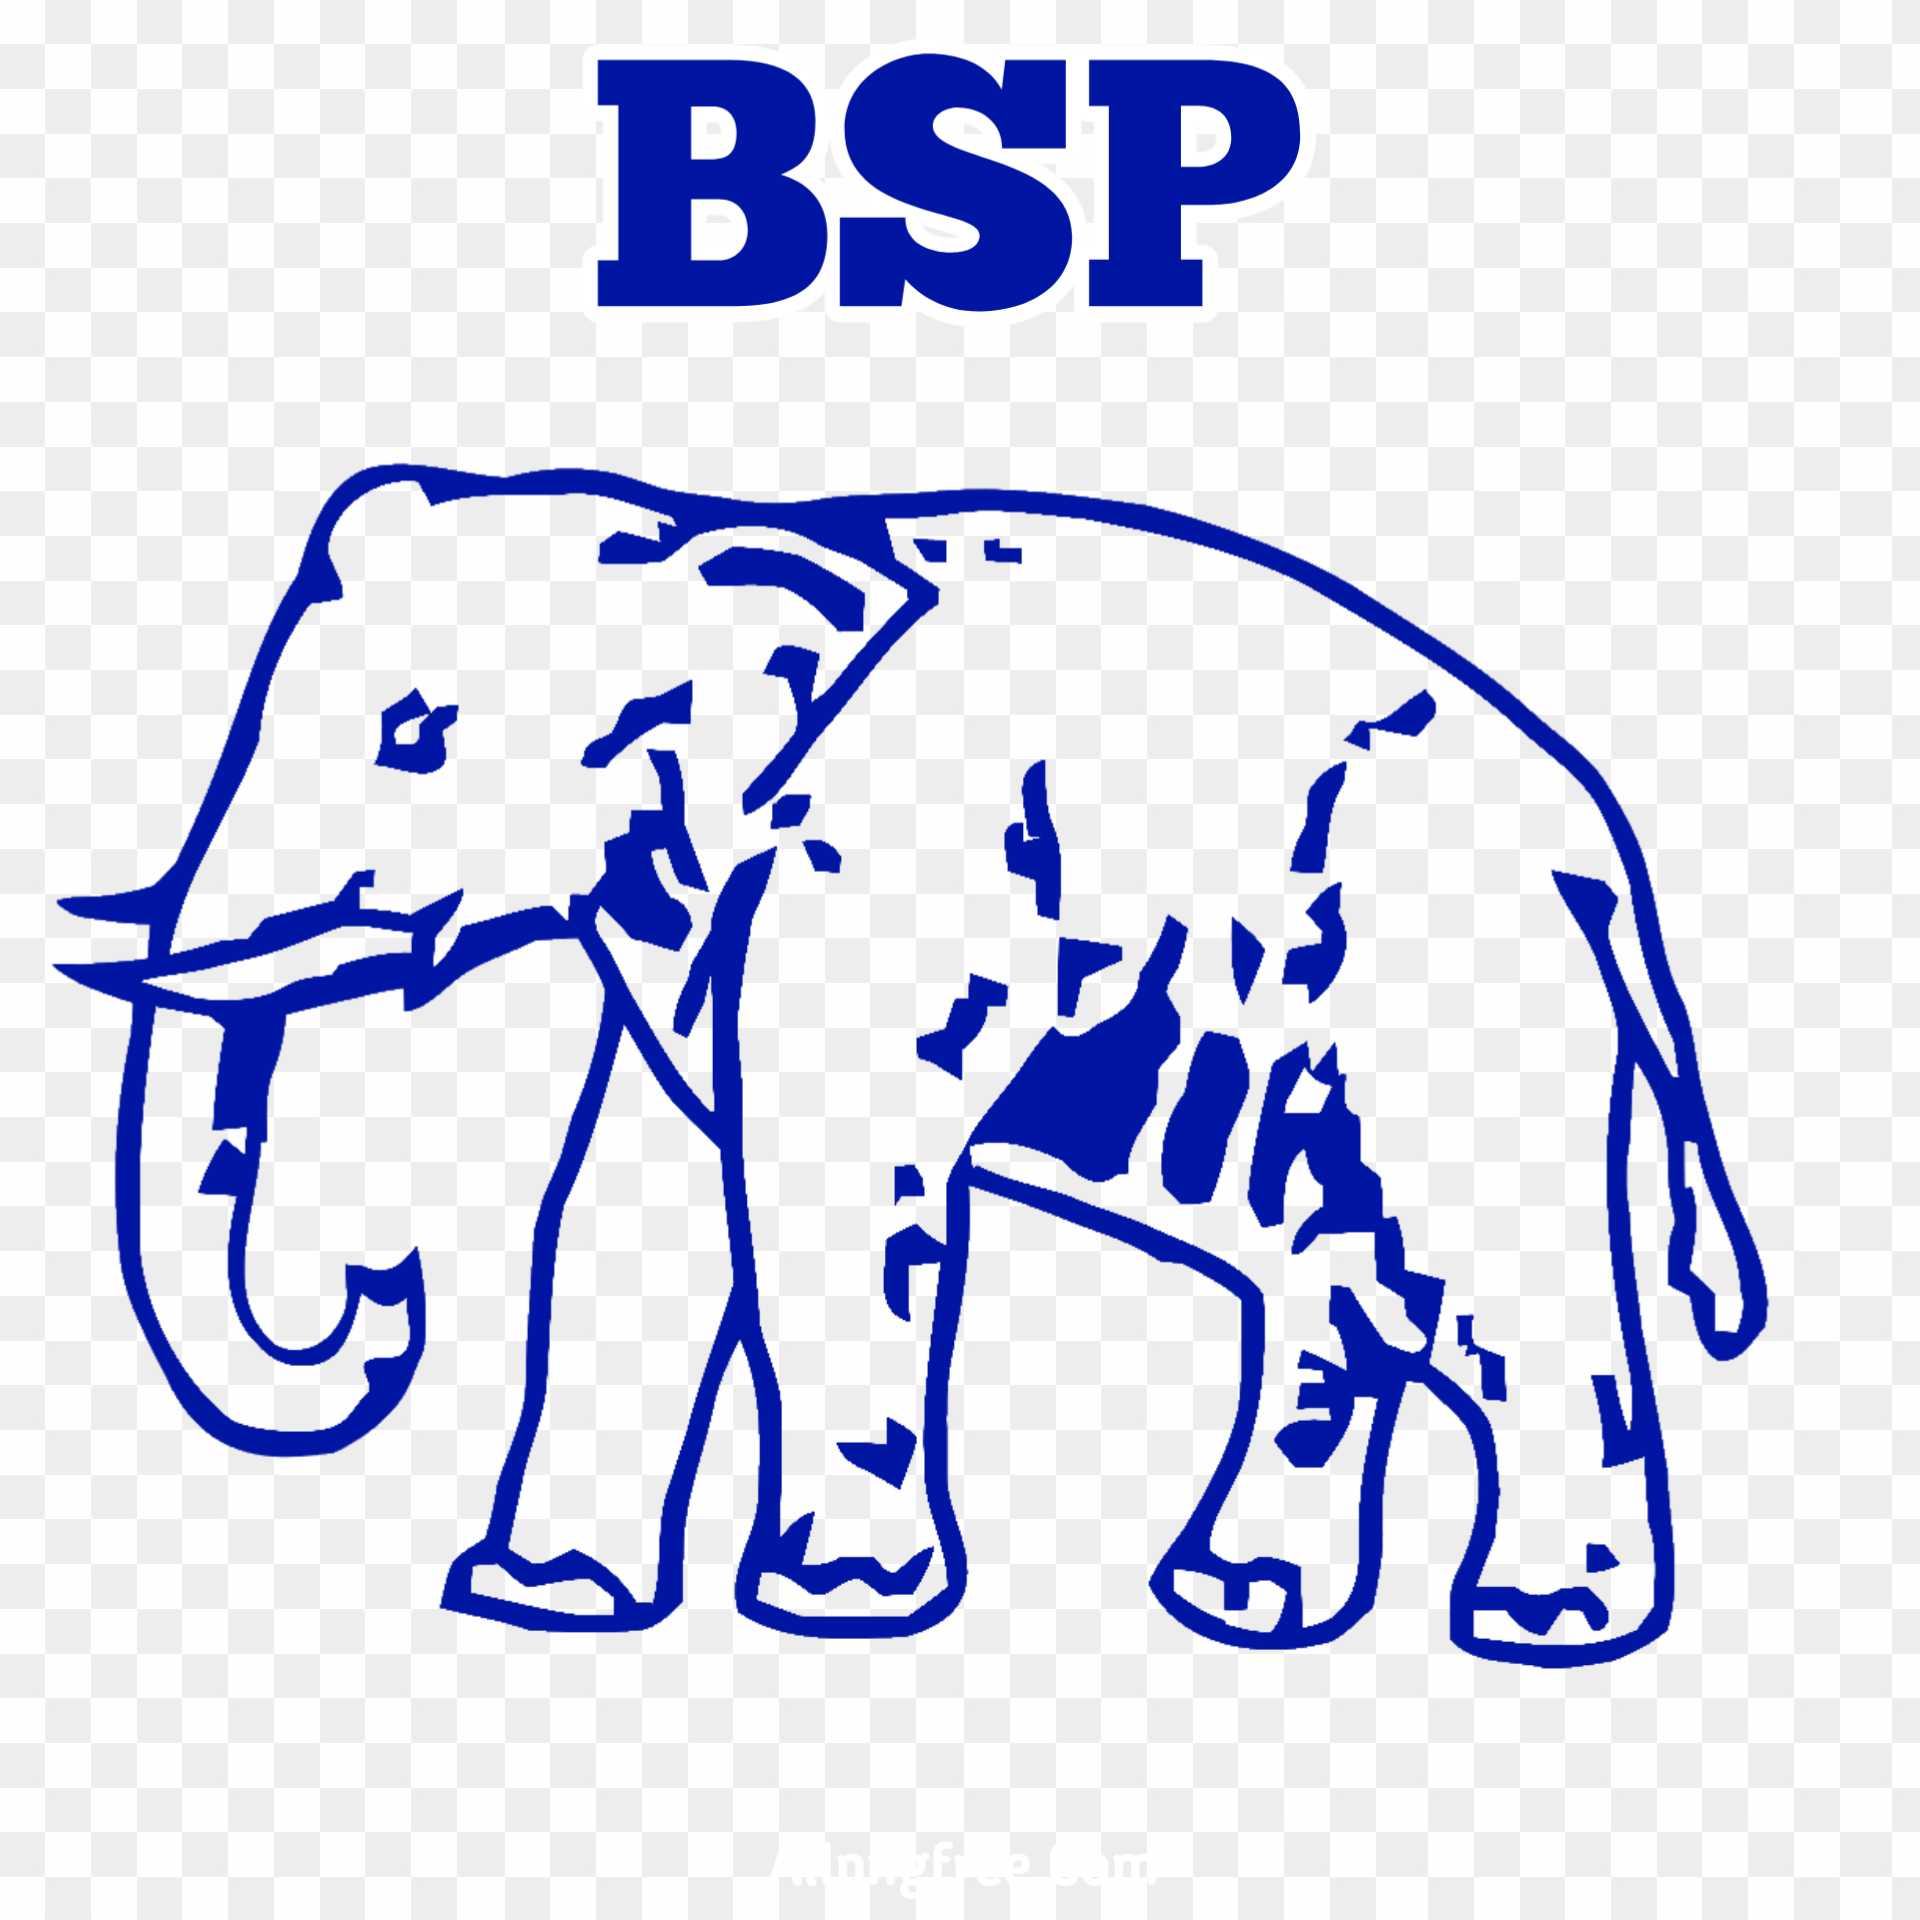 Bsp elephant logo png images 